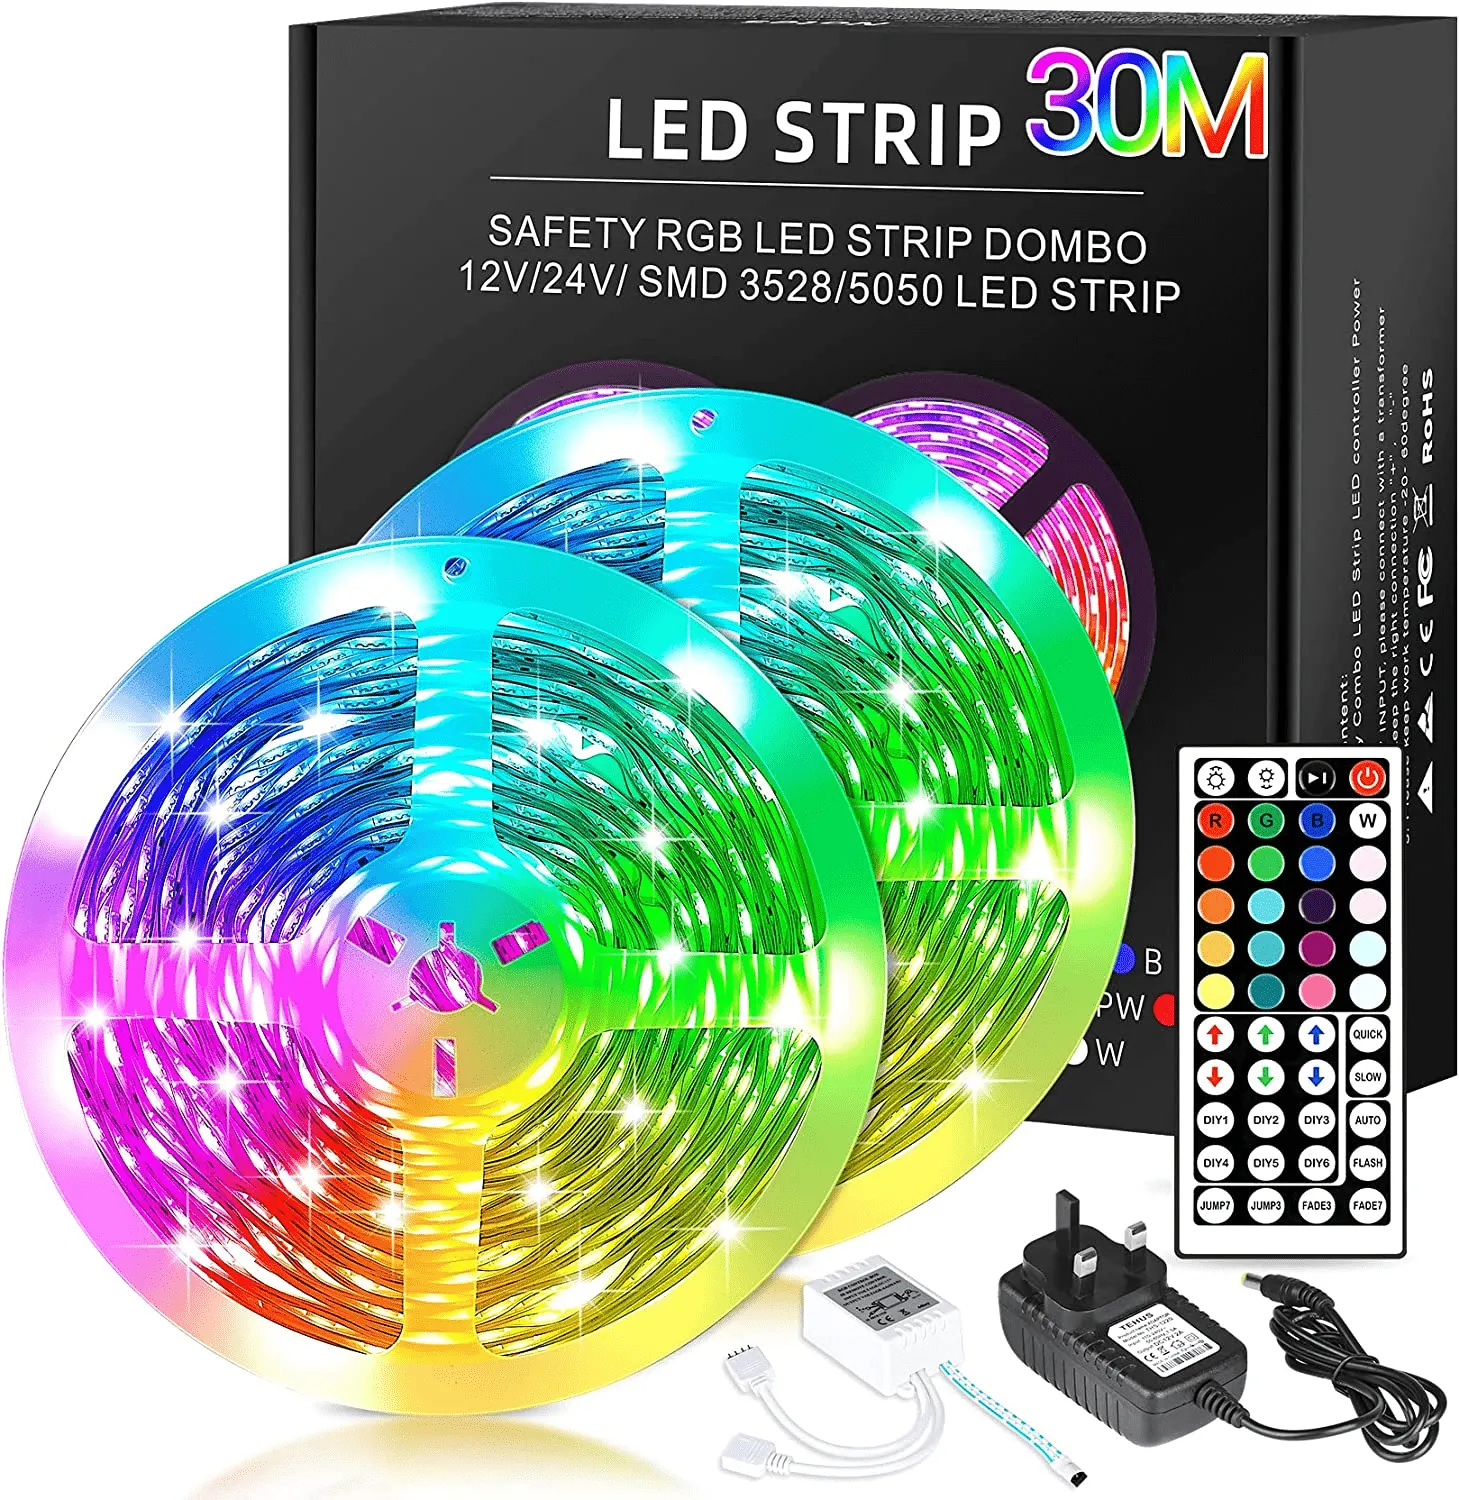 Led Strip Light 31m RGB